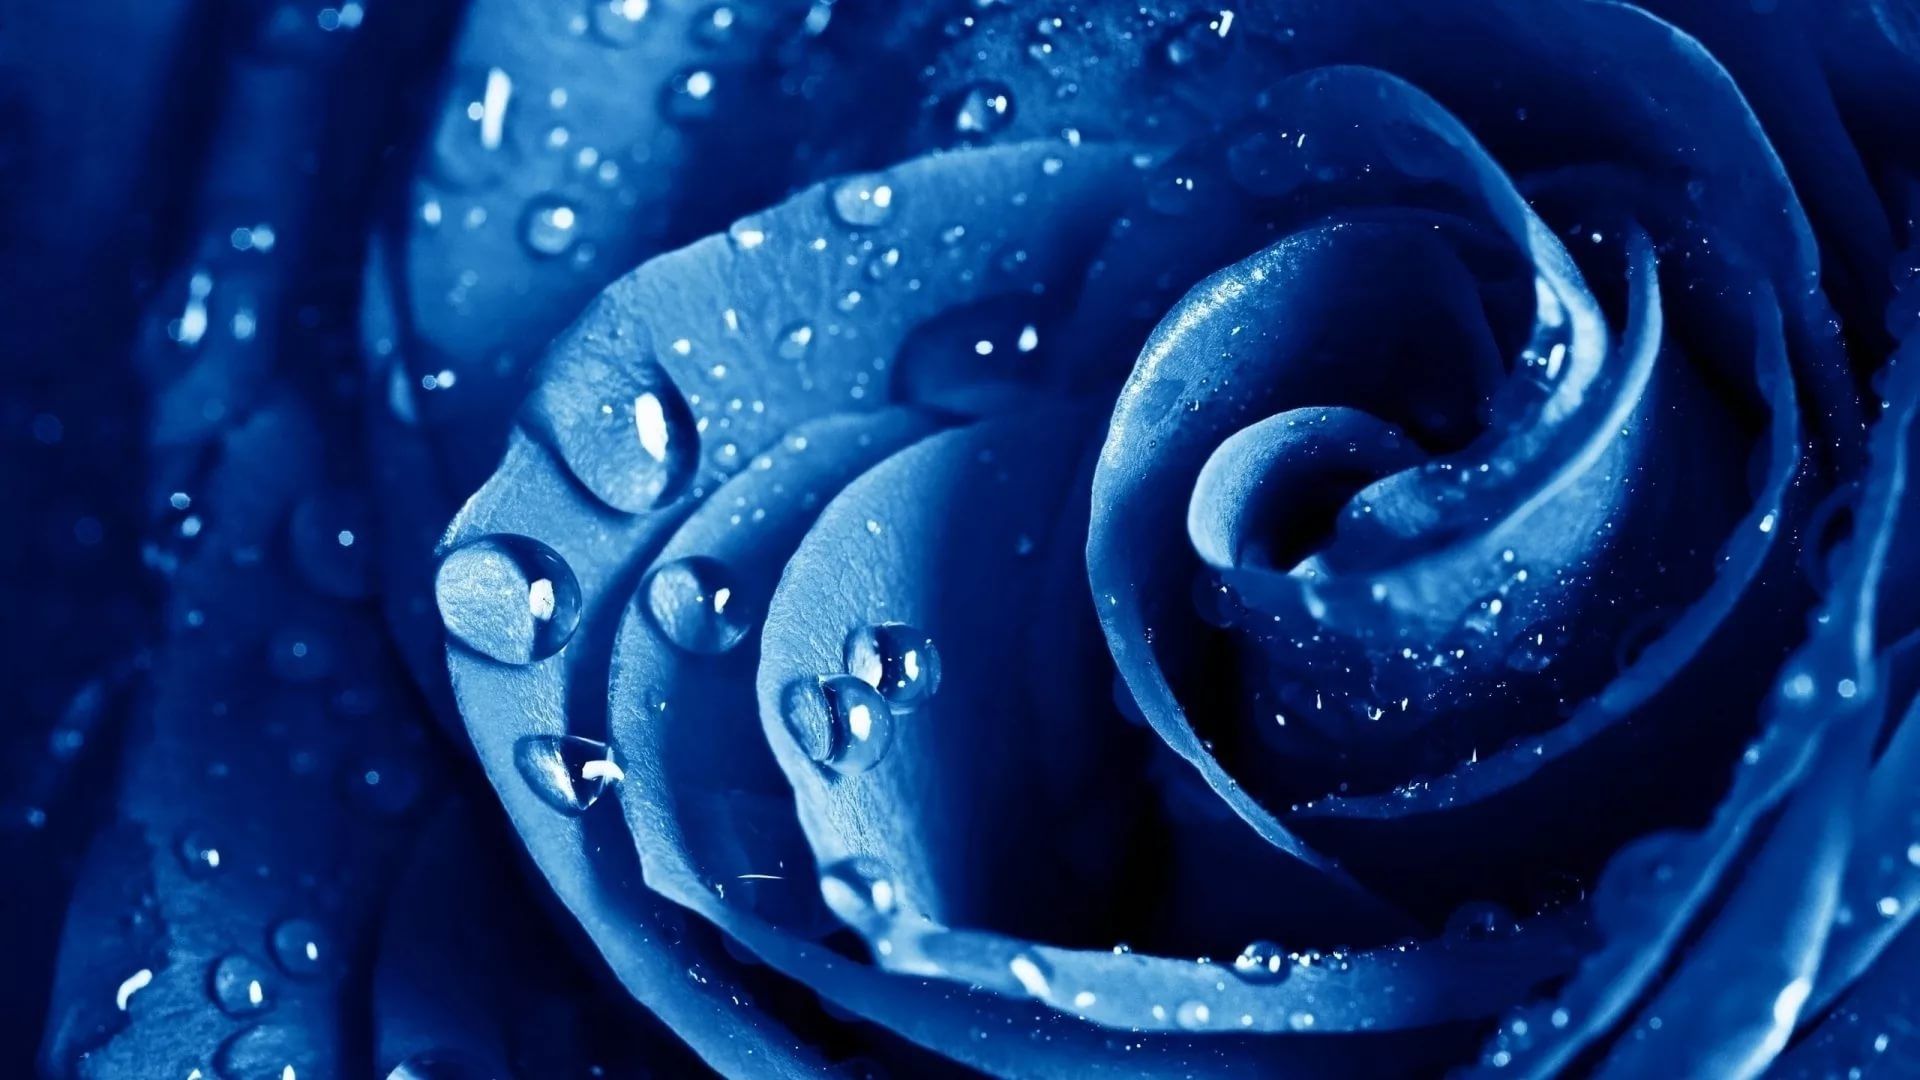 rose wallpaper hd,blue,water,rose,blue rose,moisture